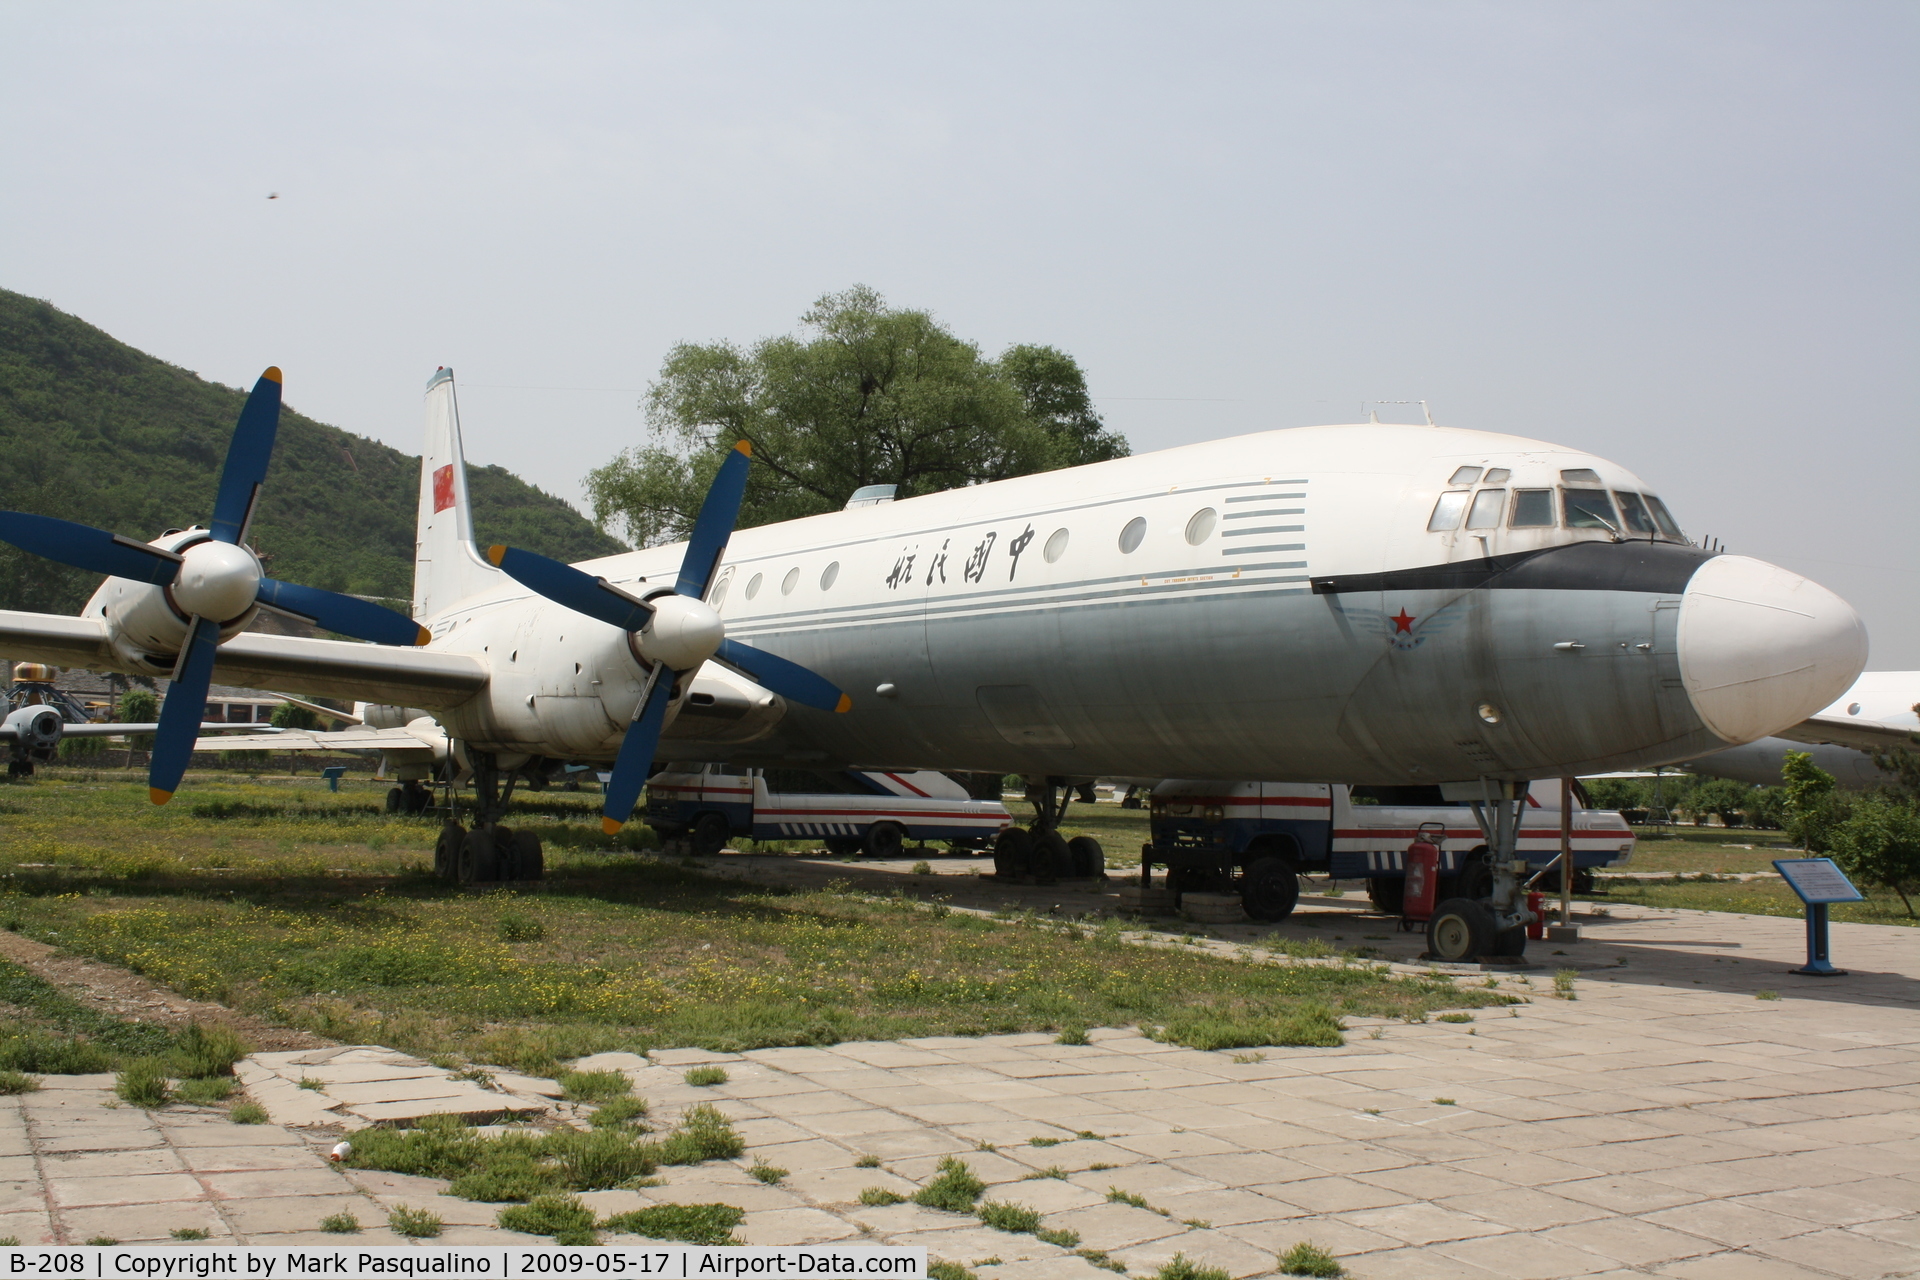 B-208, 1976 Ilyushin Il-18D C/N 187009703, Ilyushin Il-18D located at Datangshan, China